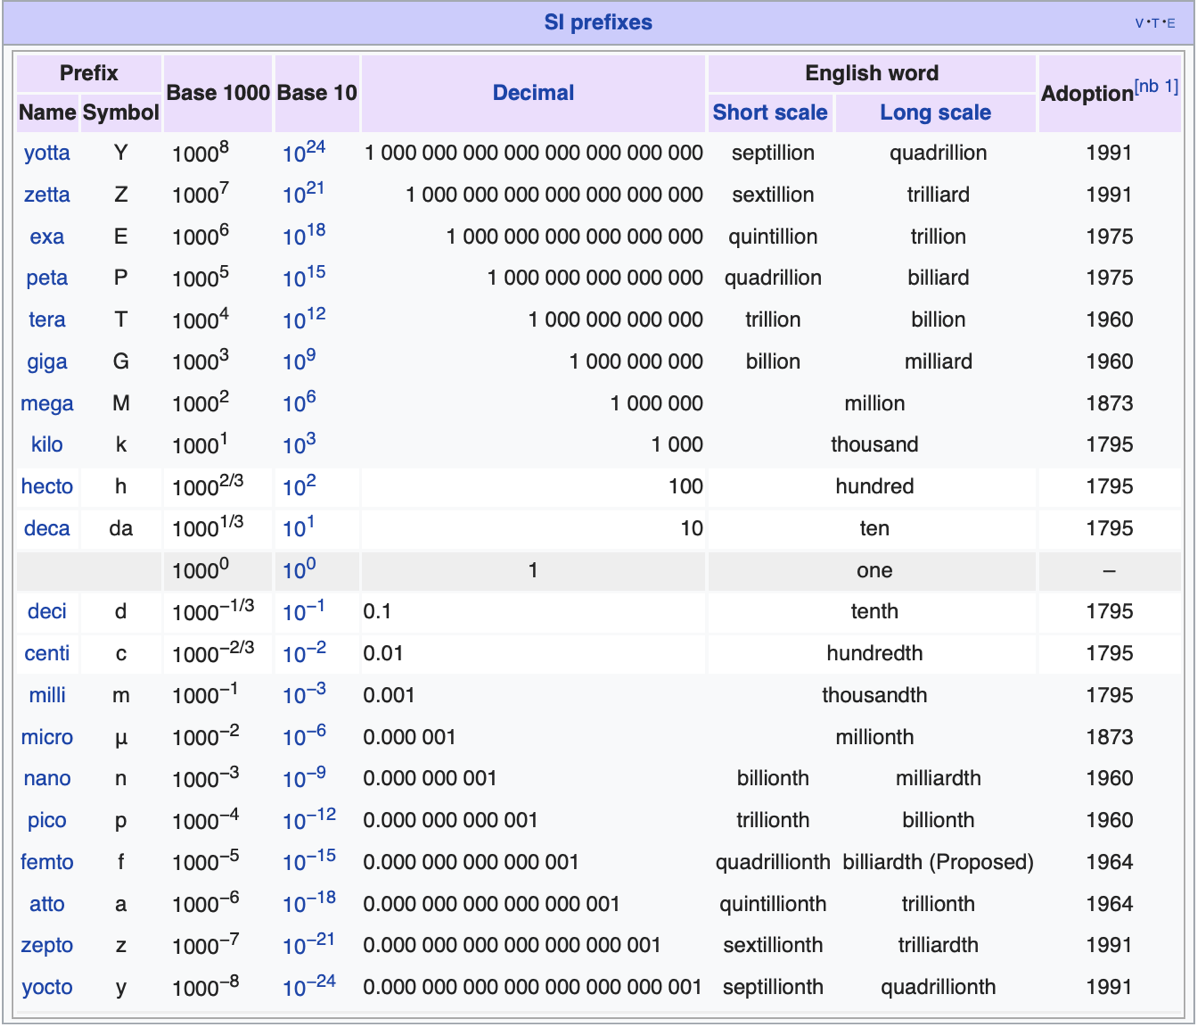 SI Prefixes from wikipedia